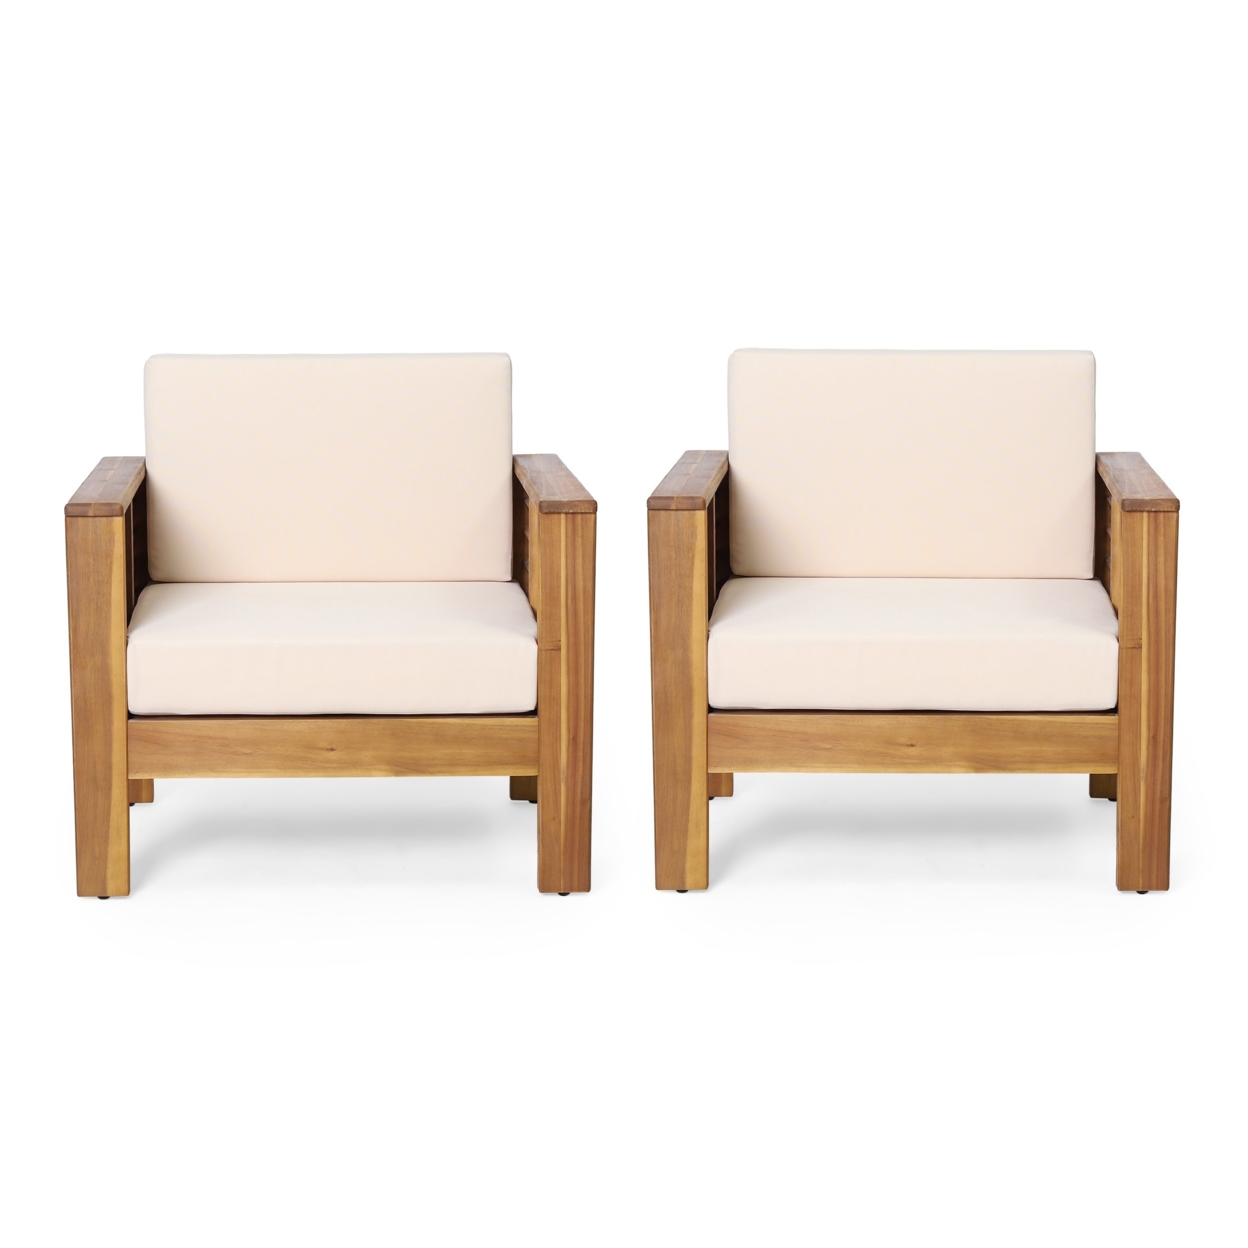 Rabun Outdoor Acacia Wood Club Chairs With Cushions, Set Of 2 - Dark Gray